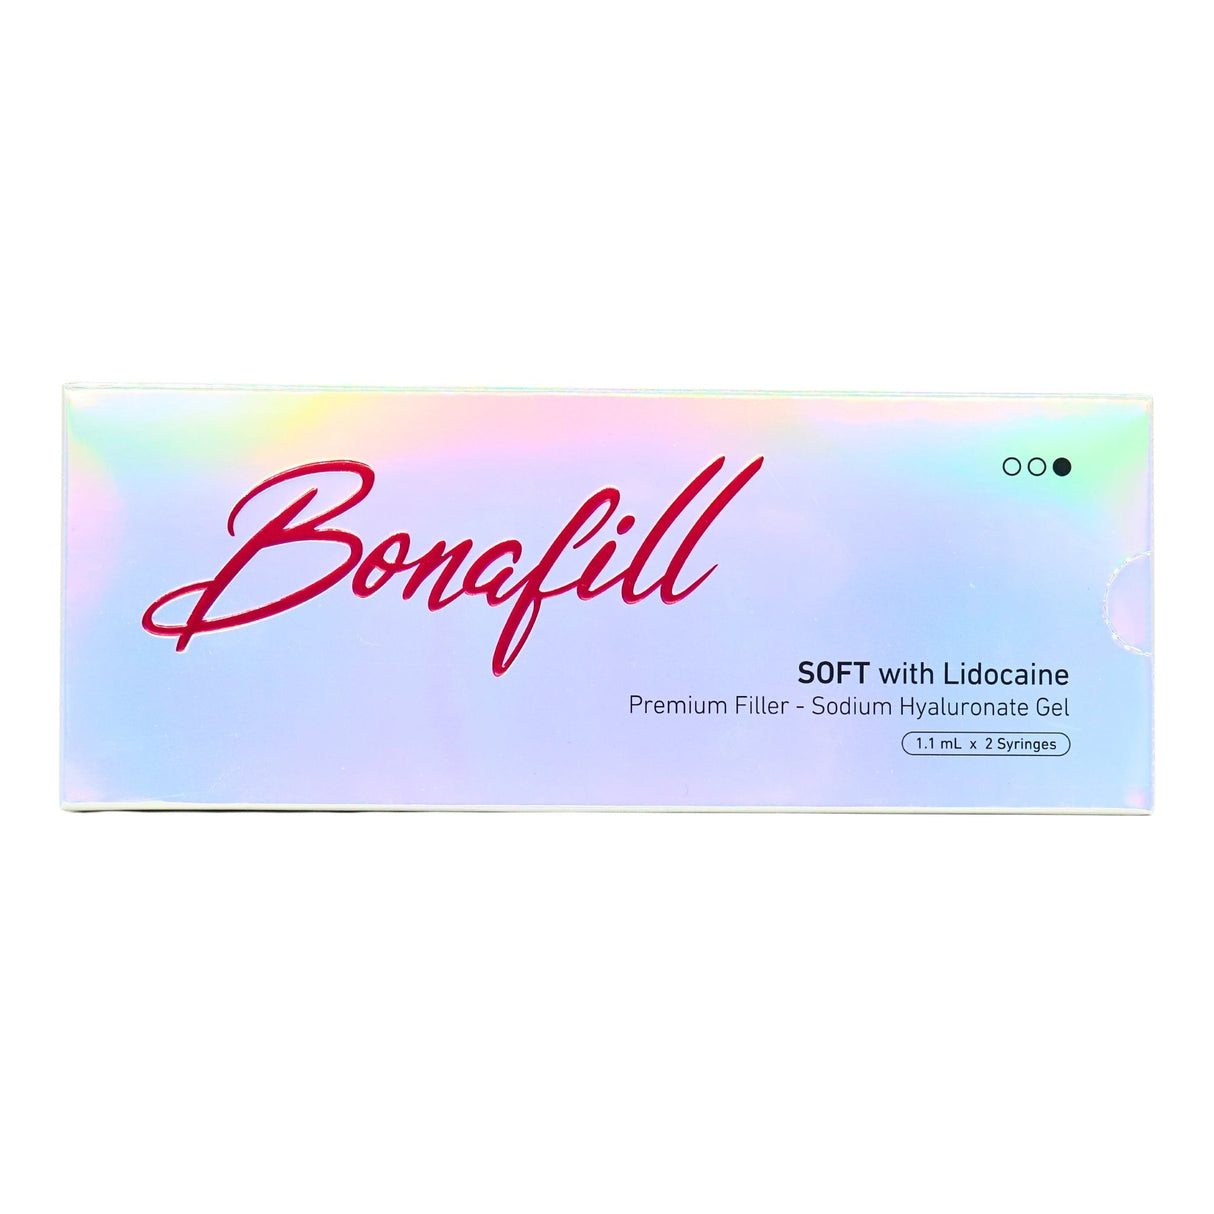 Bonafill Soft Lidocaine Premium Filler - Filler Lux™ - DERMAL FILLERS - Let It beauty Co., Ltd.